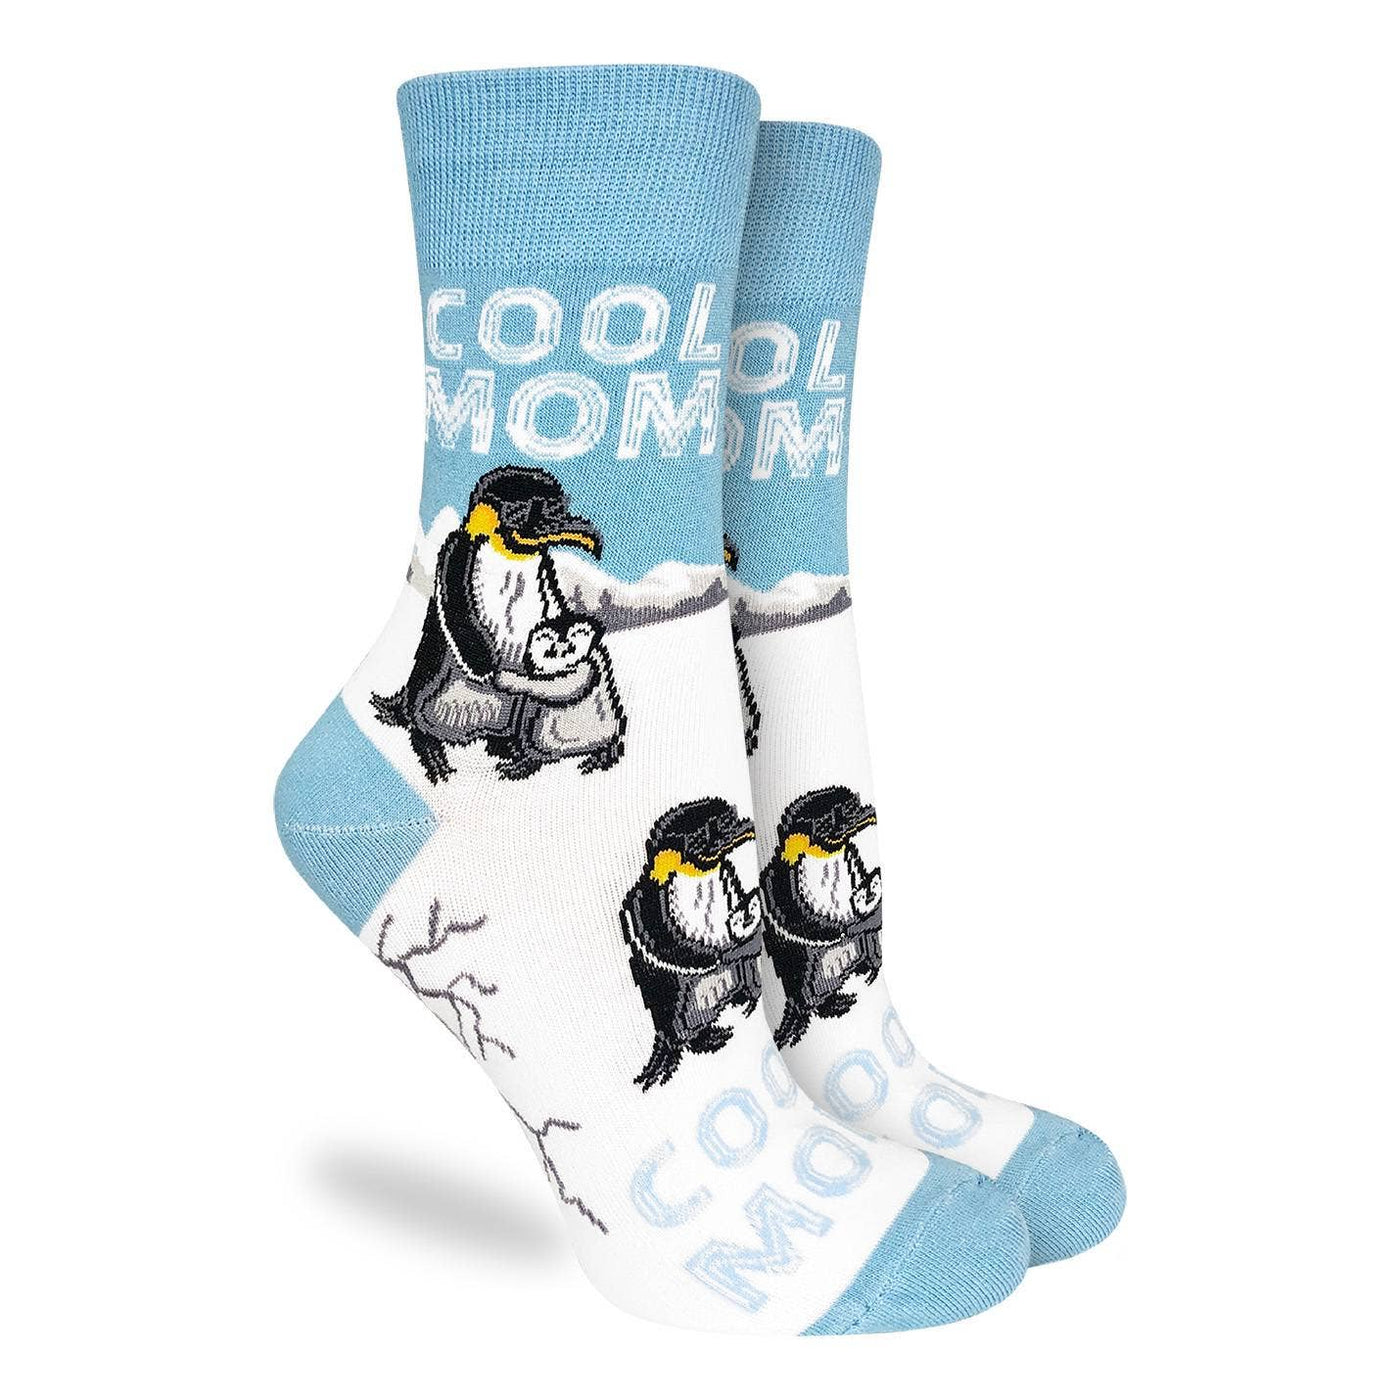 Women's Cool Mom Socks